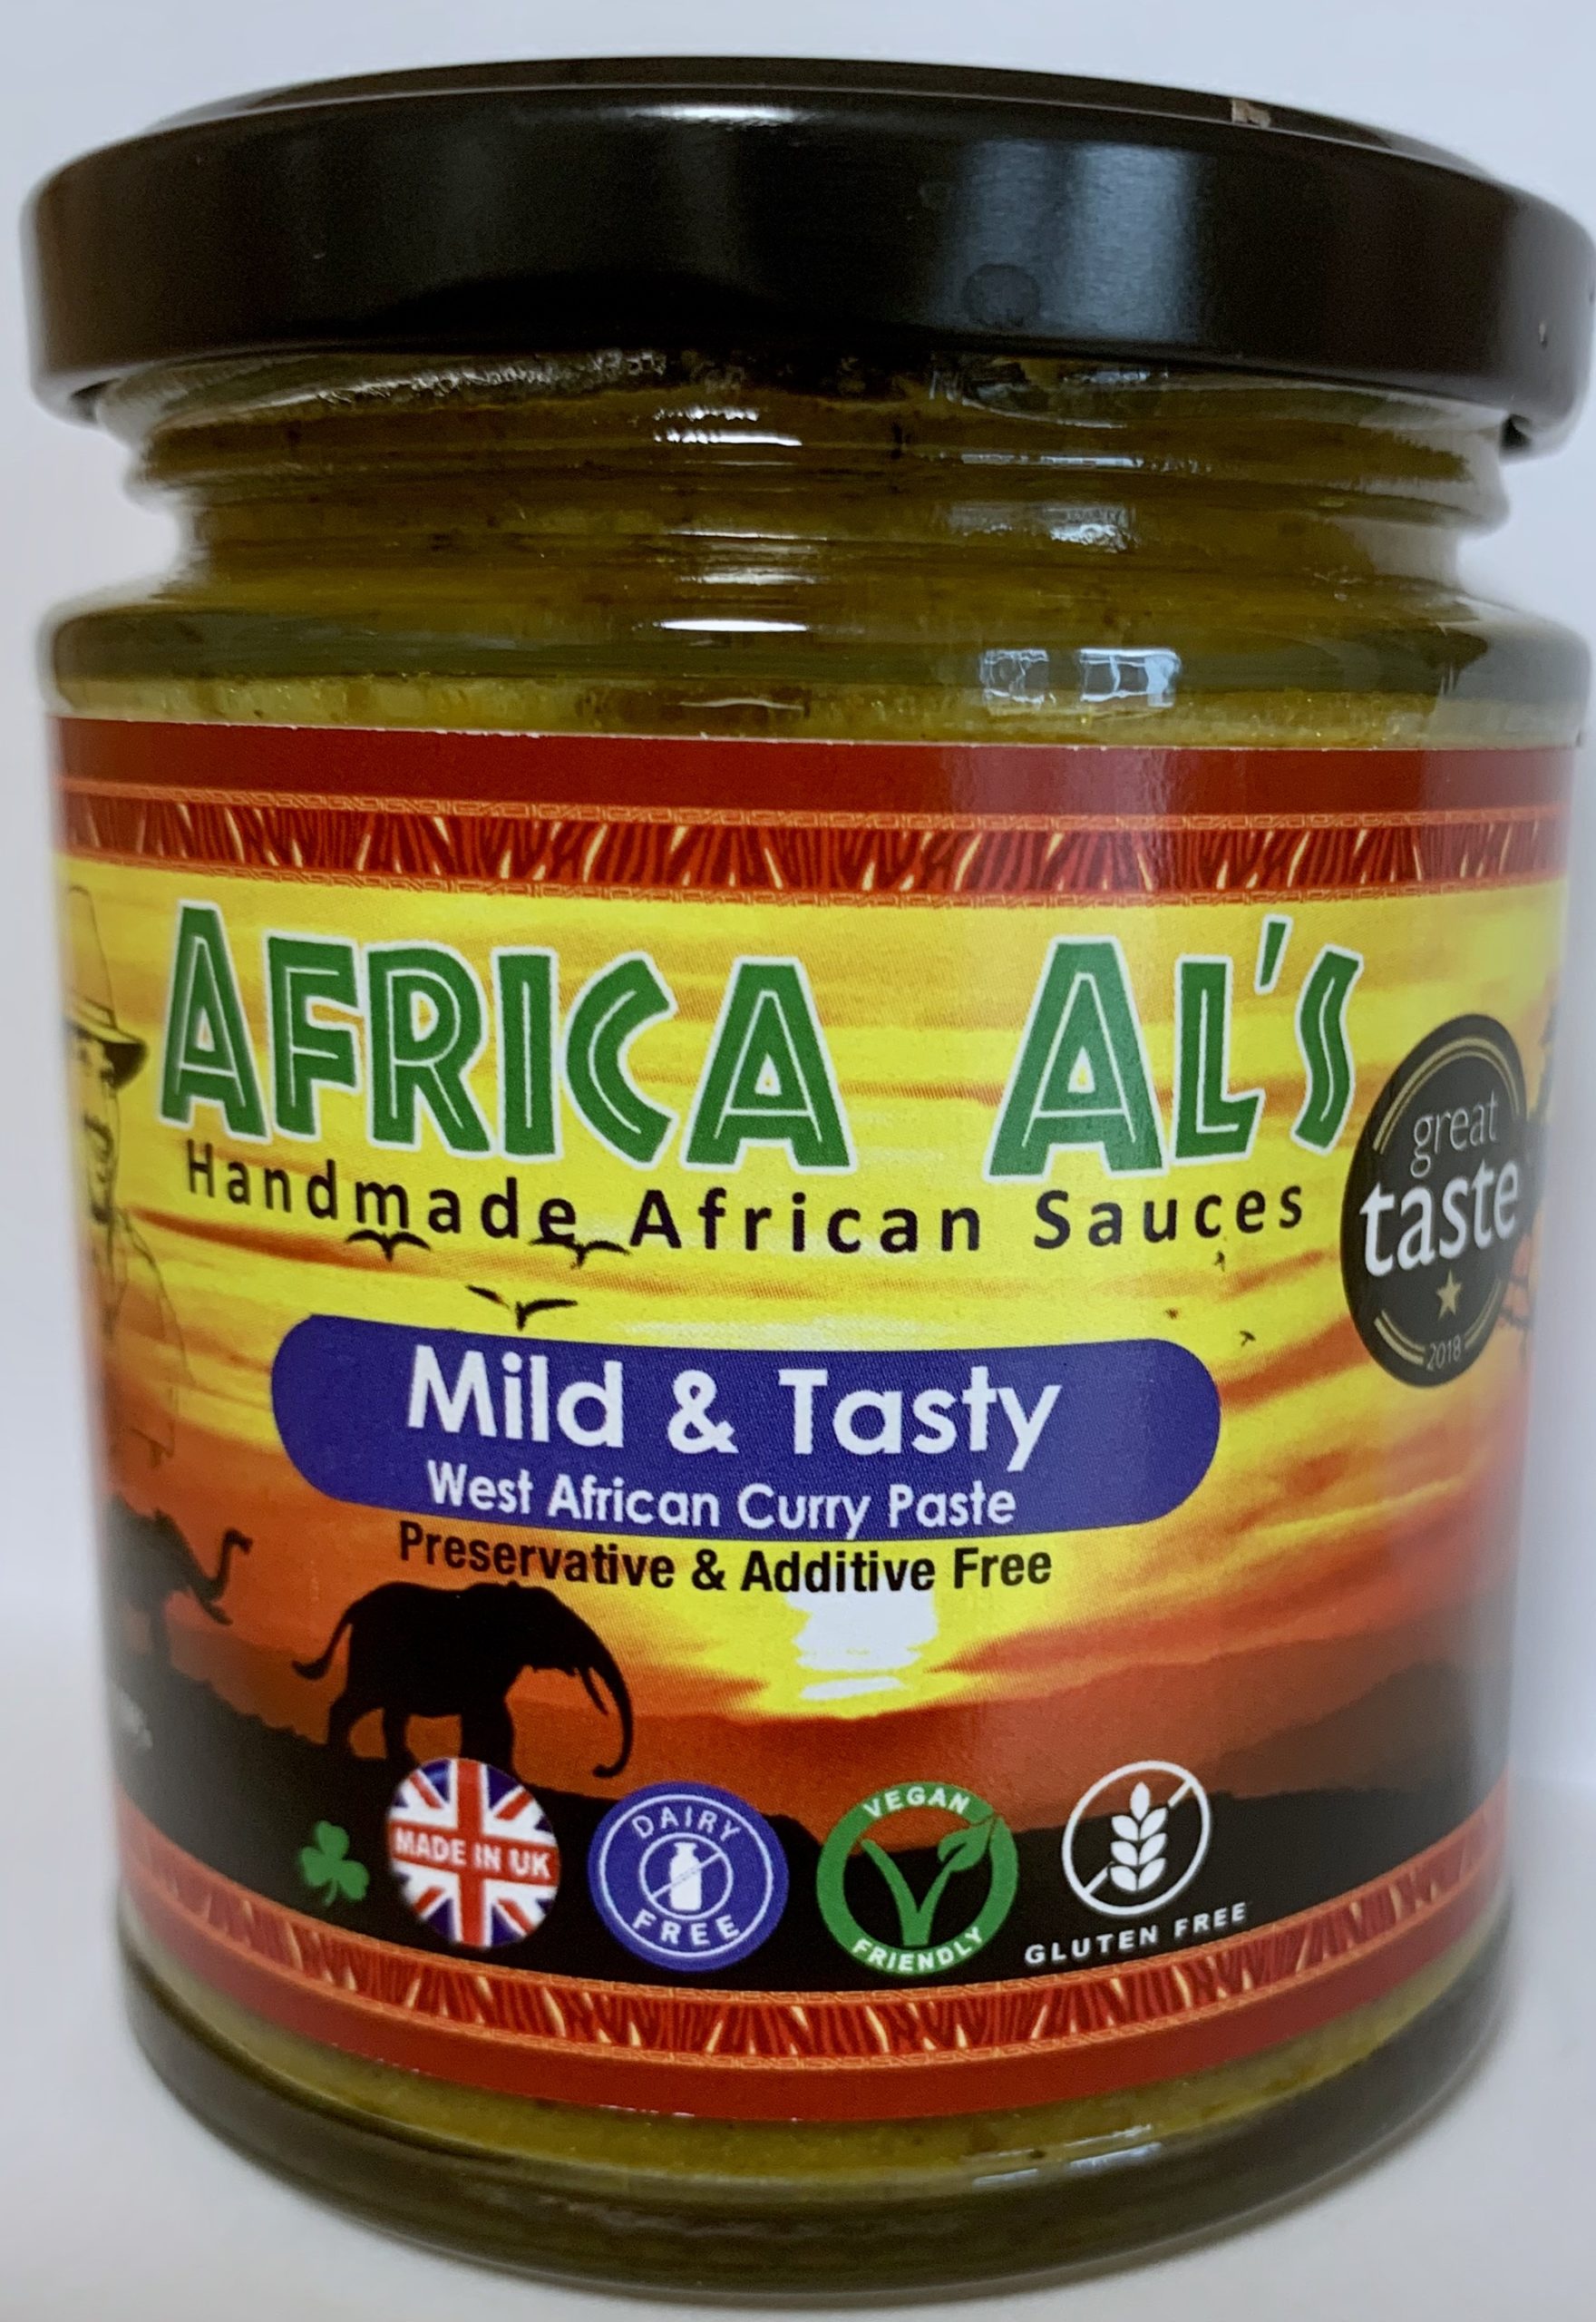 Africa Al's Mild & Tasty West African Curry Paste Great Tasty Winner